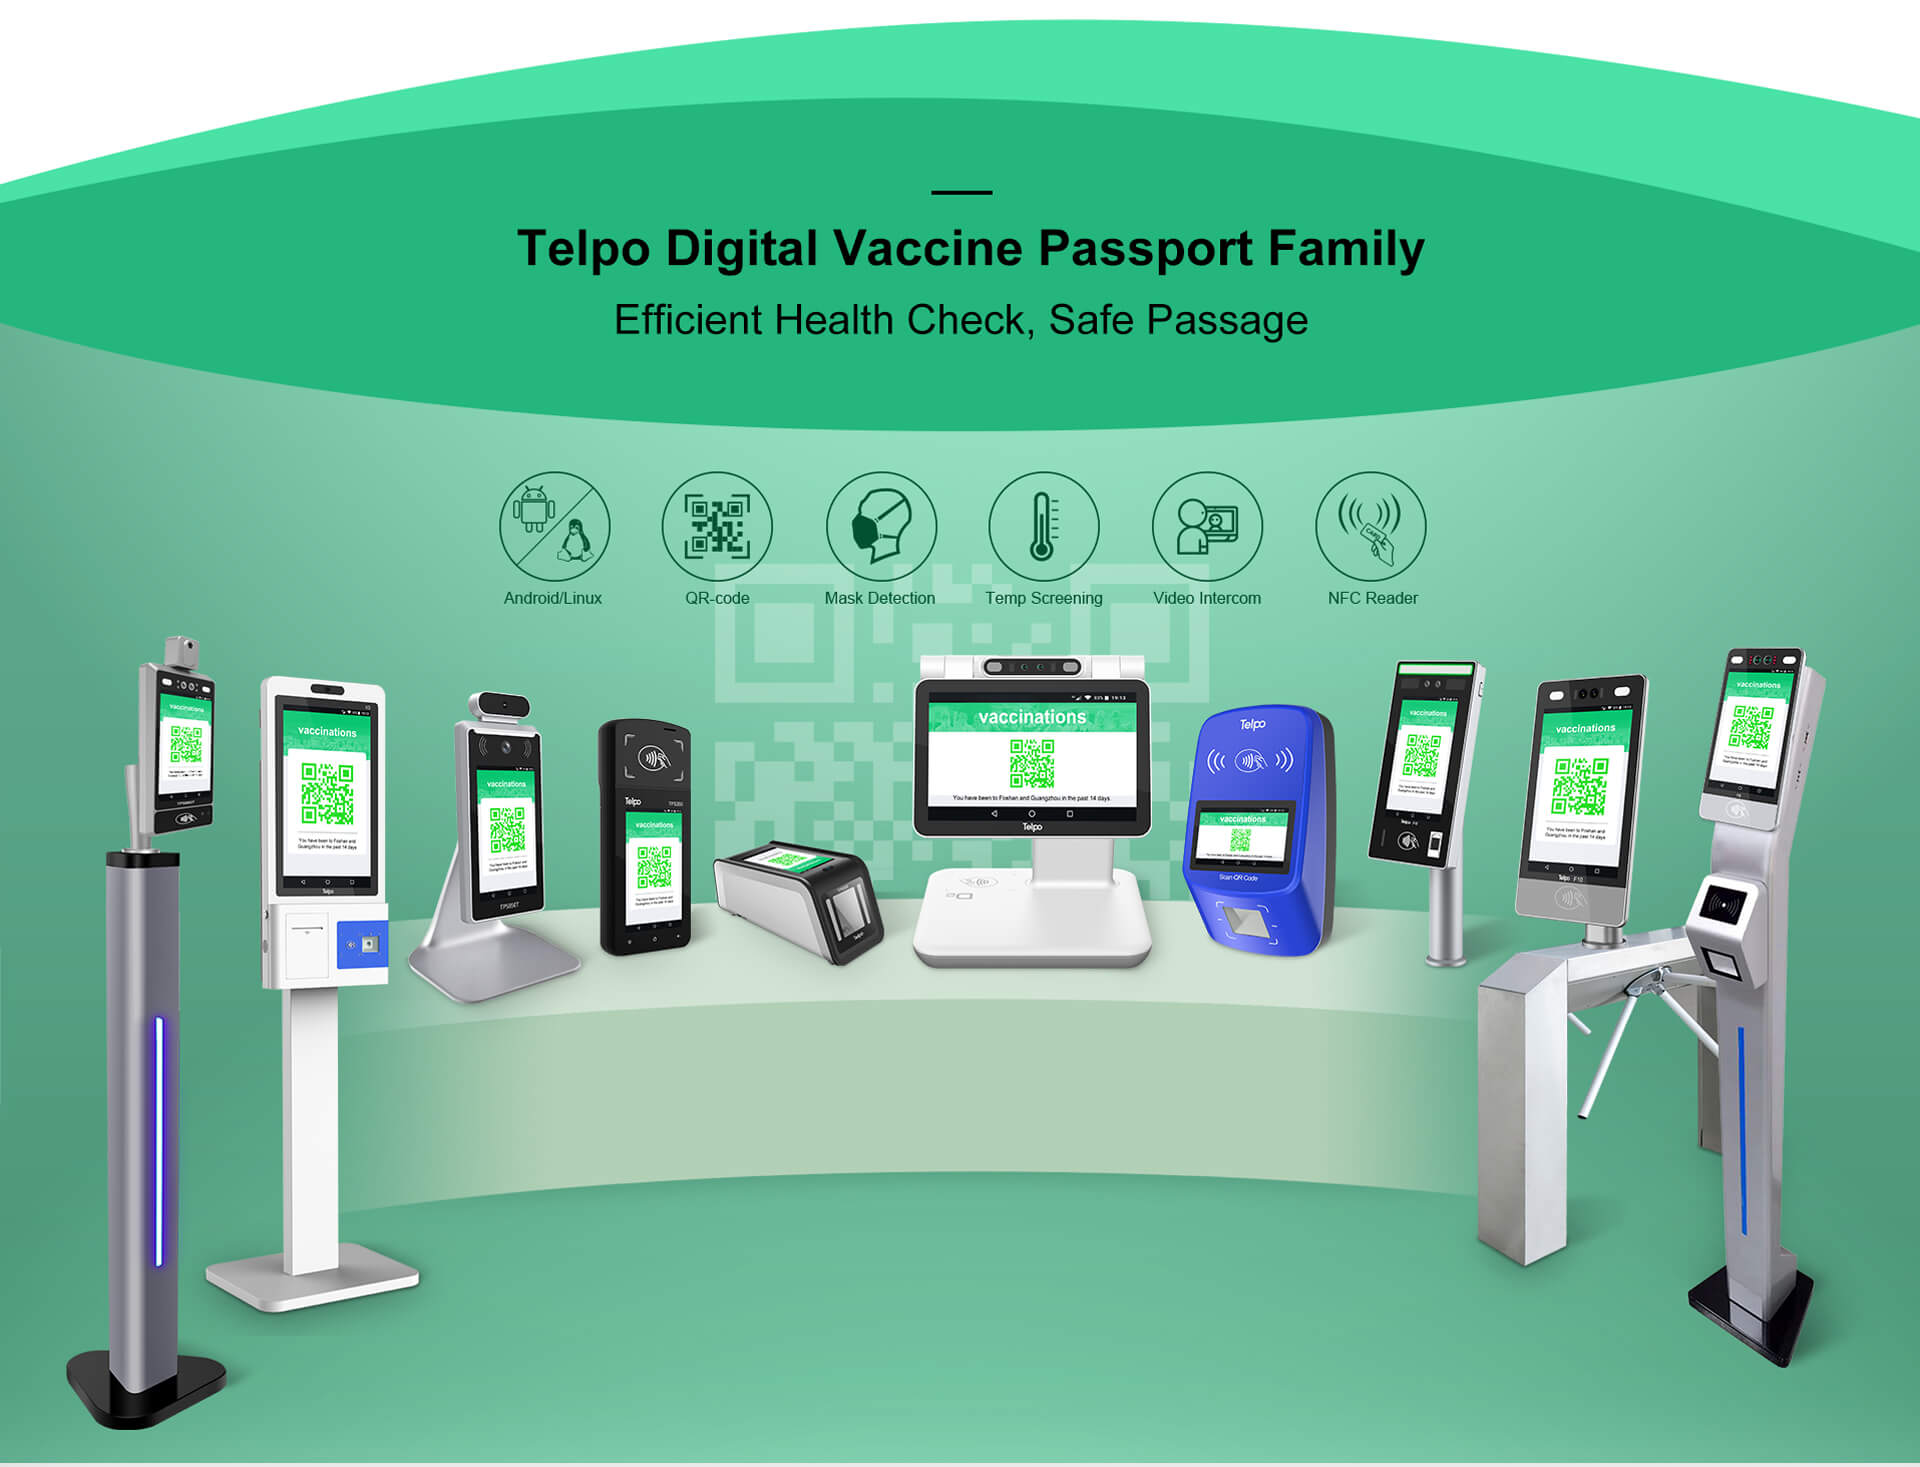 Advantages of Digital Vaccine Passport